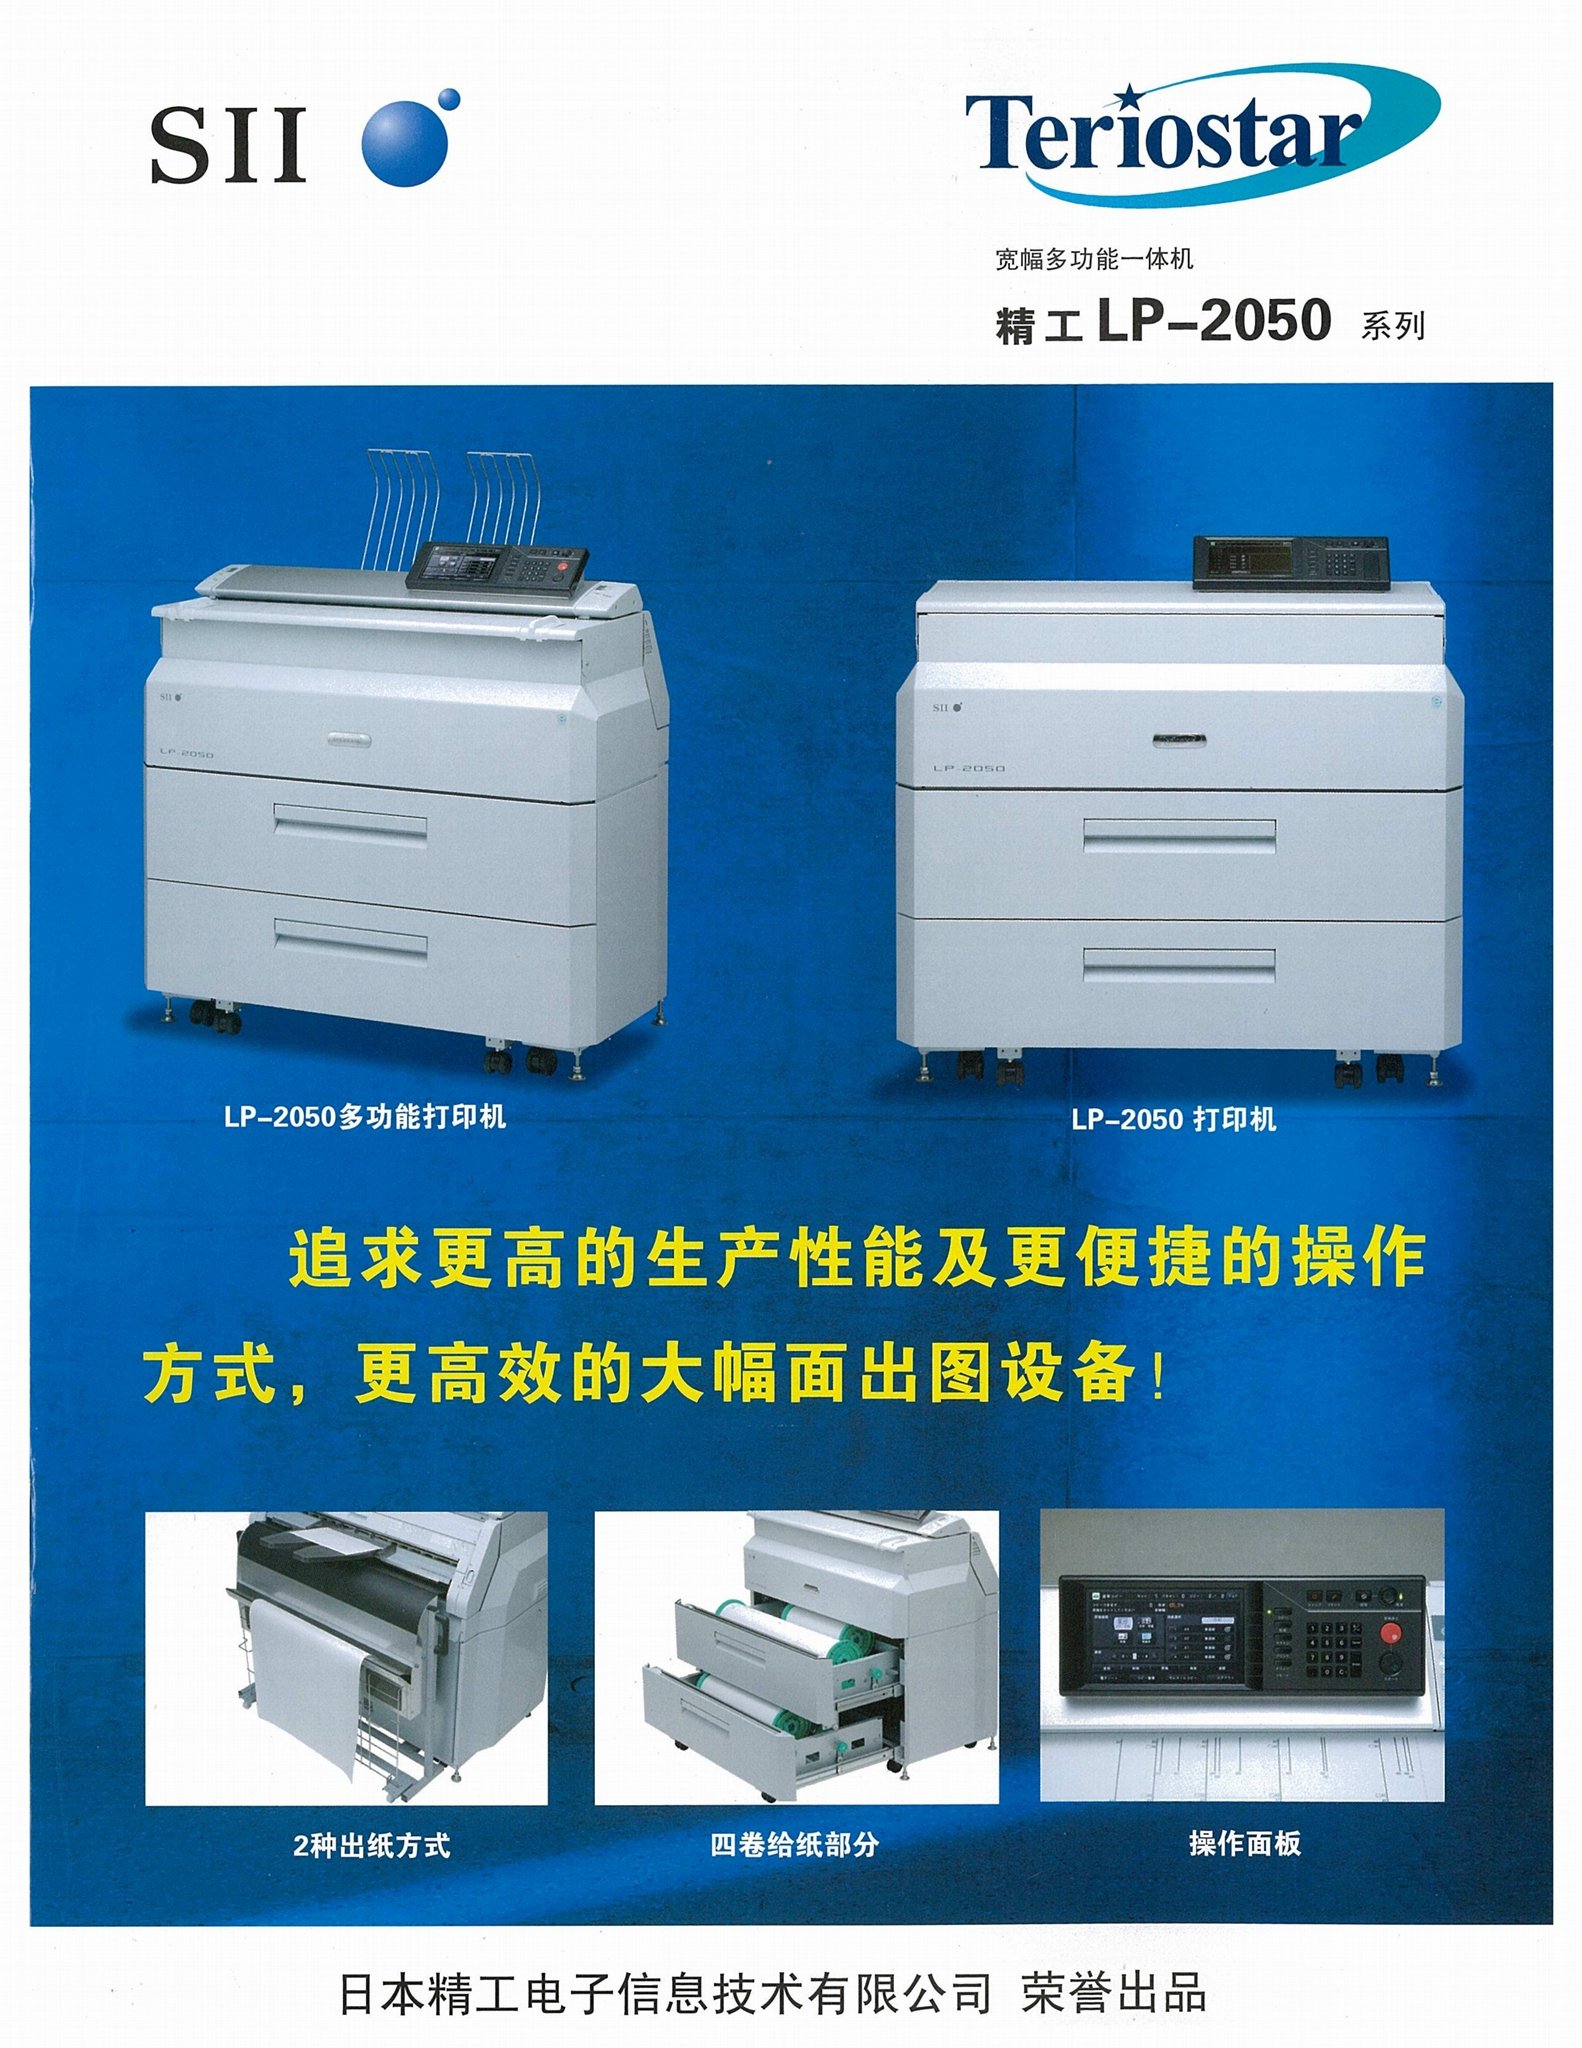 OKI高配置工程機/藍圖機 LP-2060 3